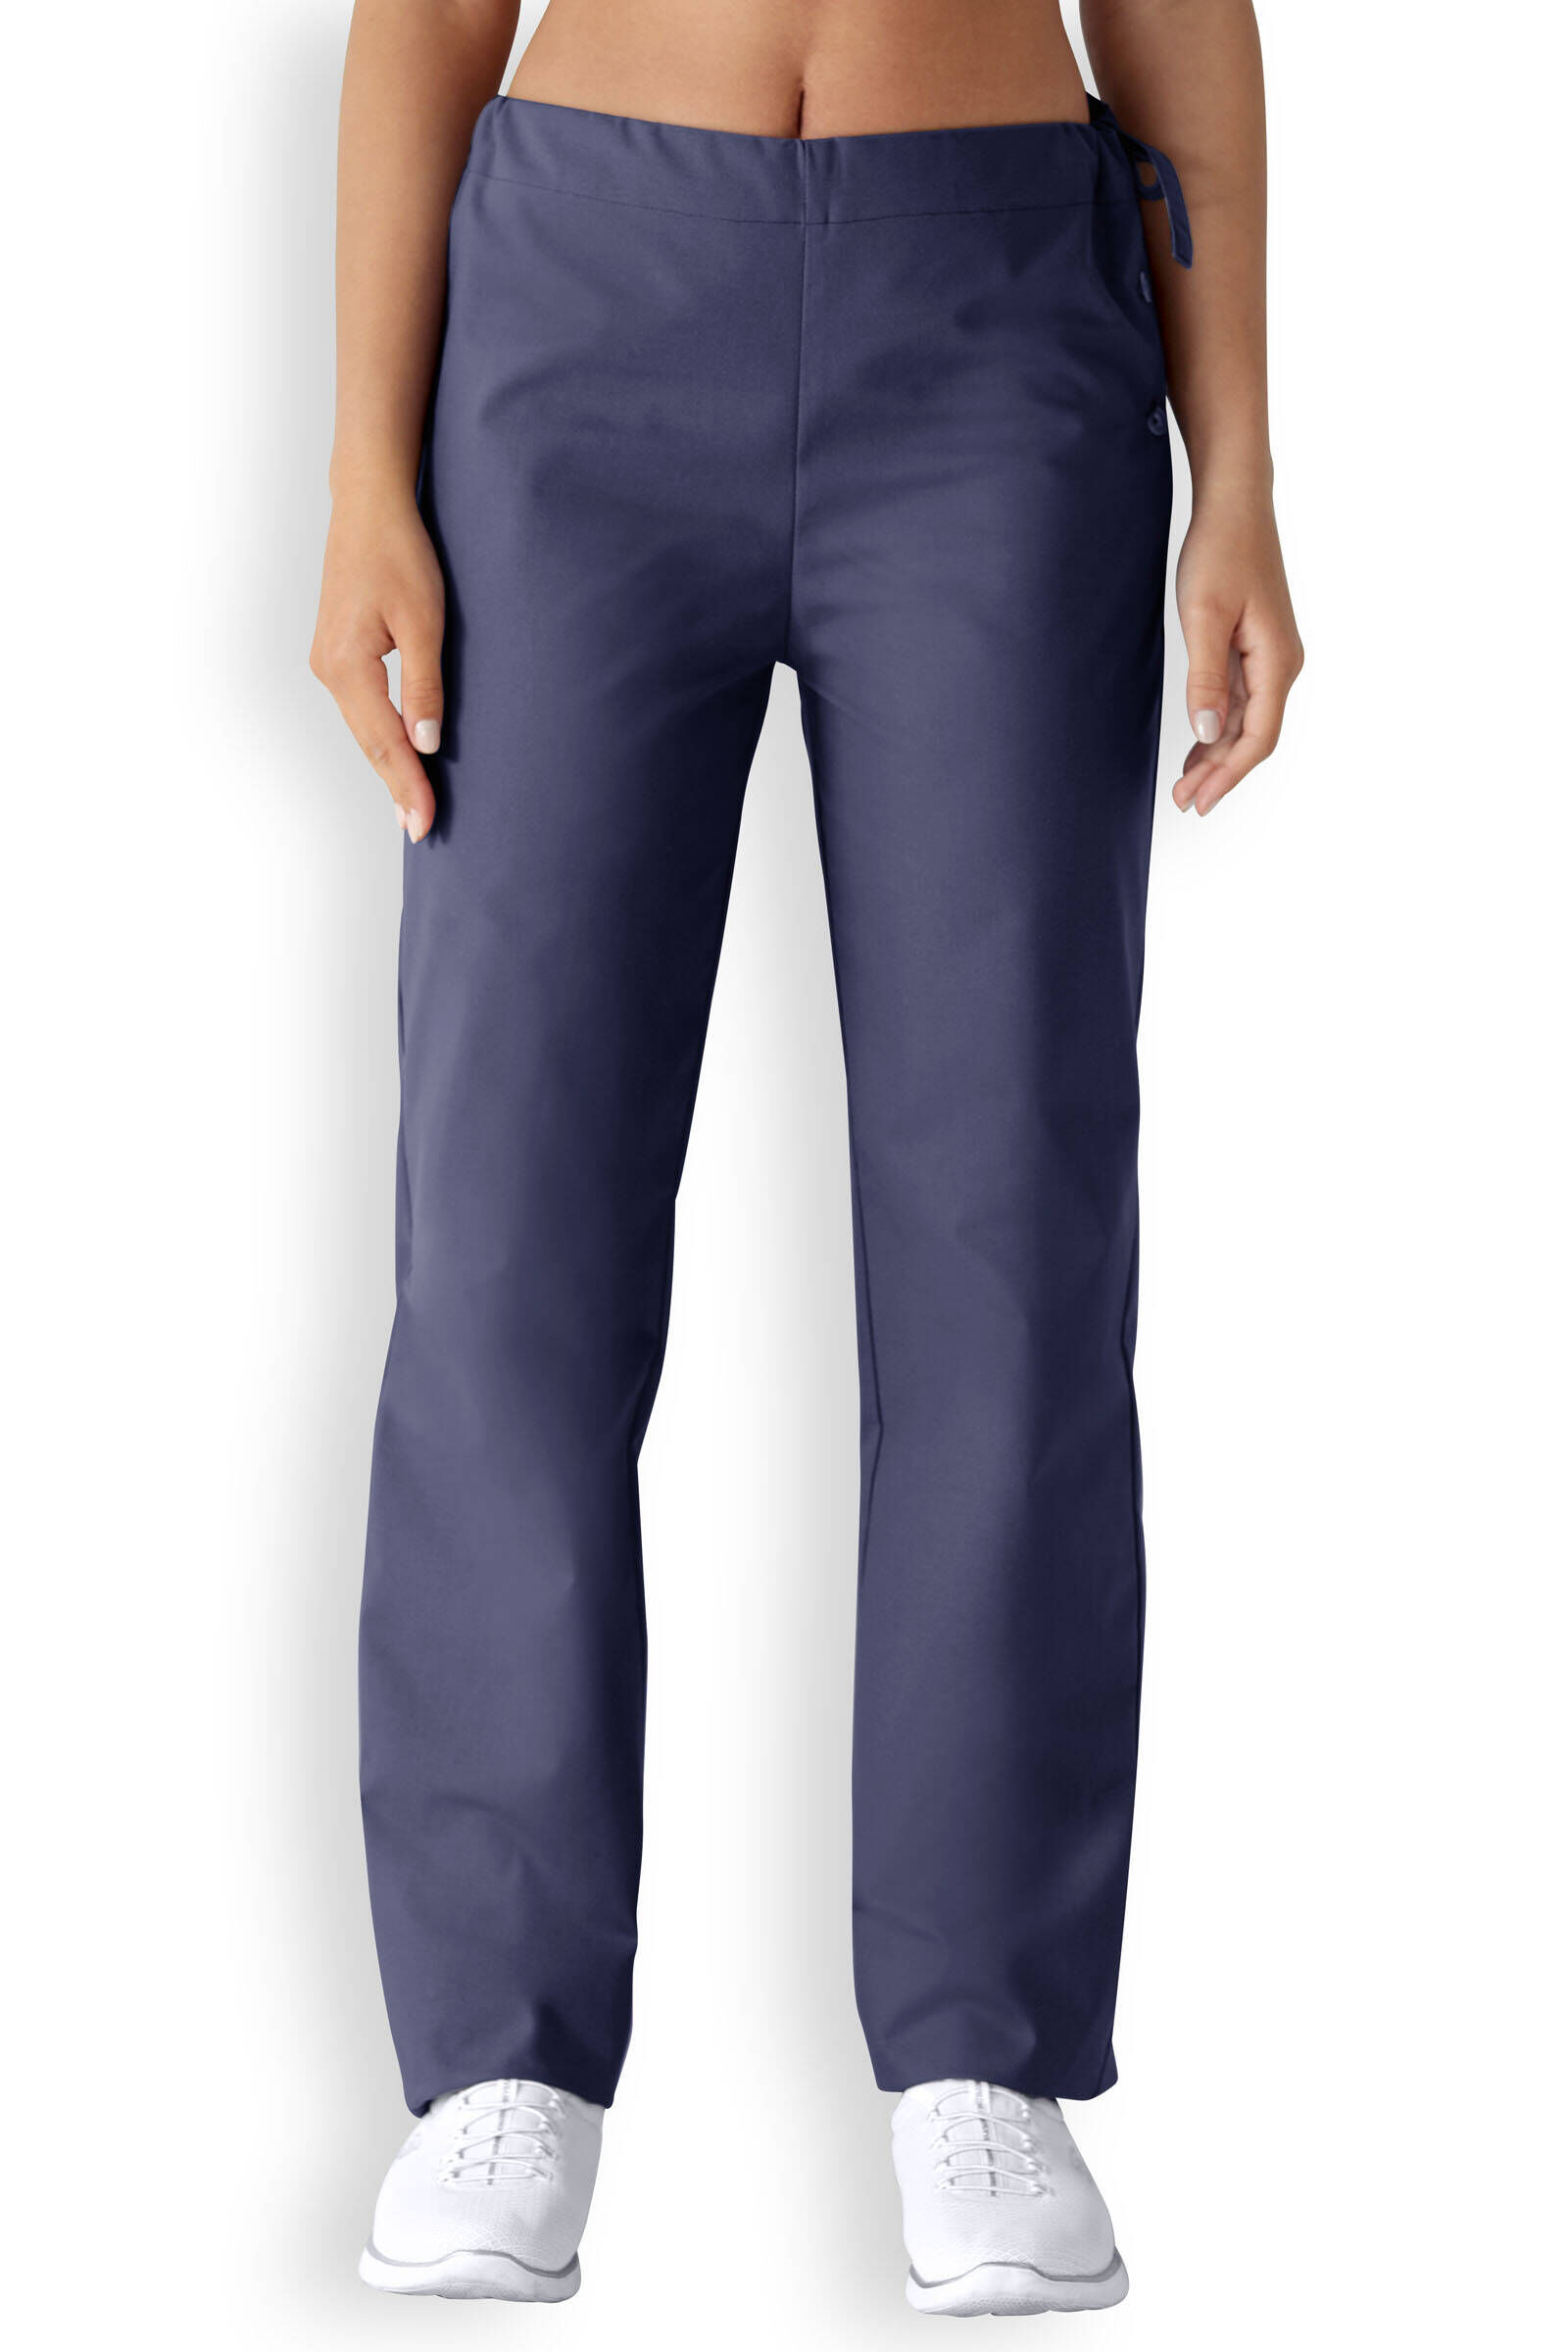 CLINIC DRESS Pantalon médical mixte Taille 4XL light navy  - Rouge régence - Size: S - unisex